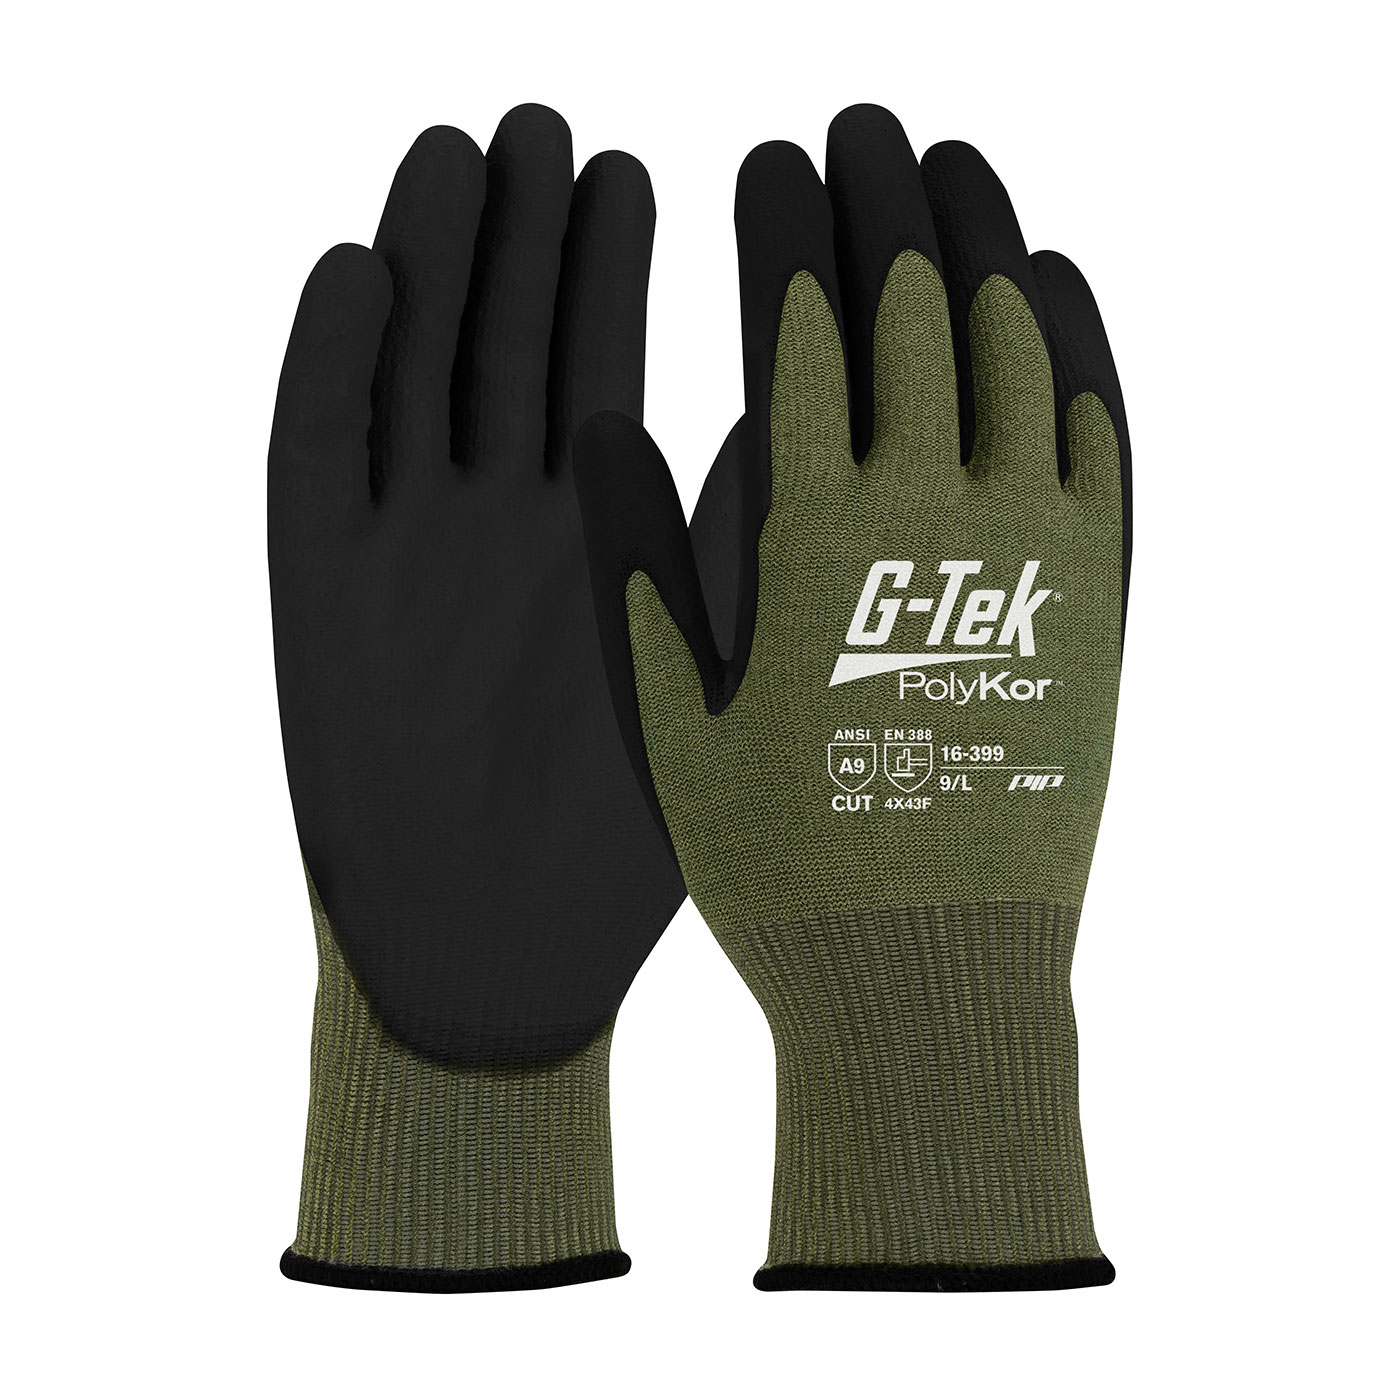 16-399 PIP®G-Tek®PolyKor®X7™无缝针织X7™混纺手套，手掌和手指上的NeoFoam®涂层MicroSurface抓地力-触摸屏兼容